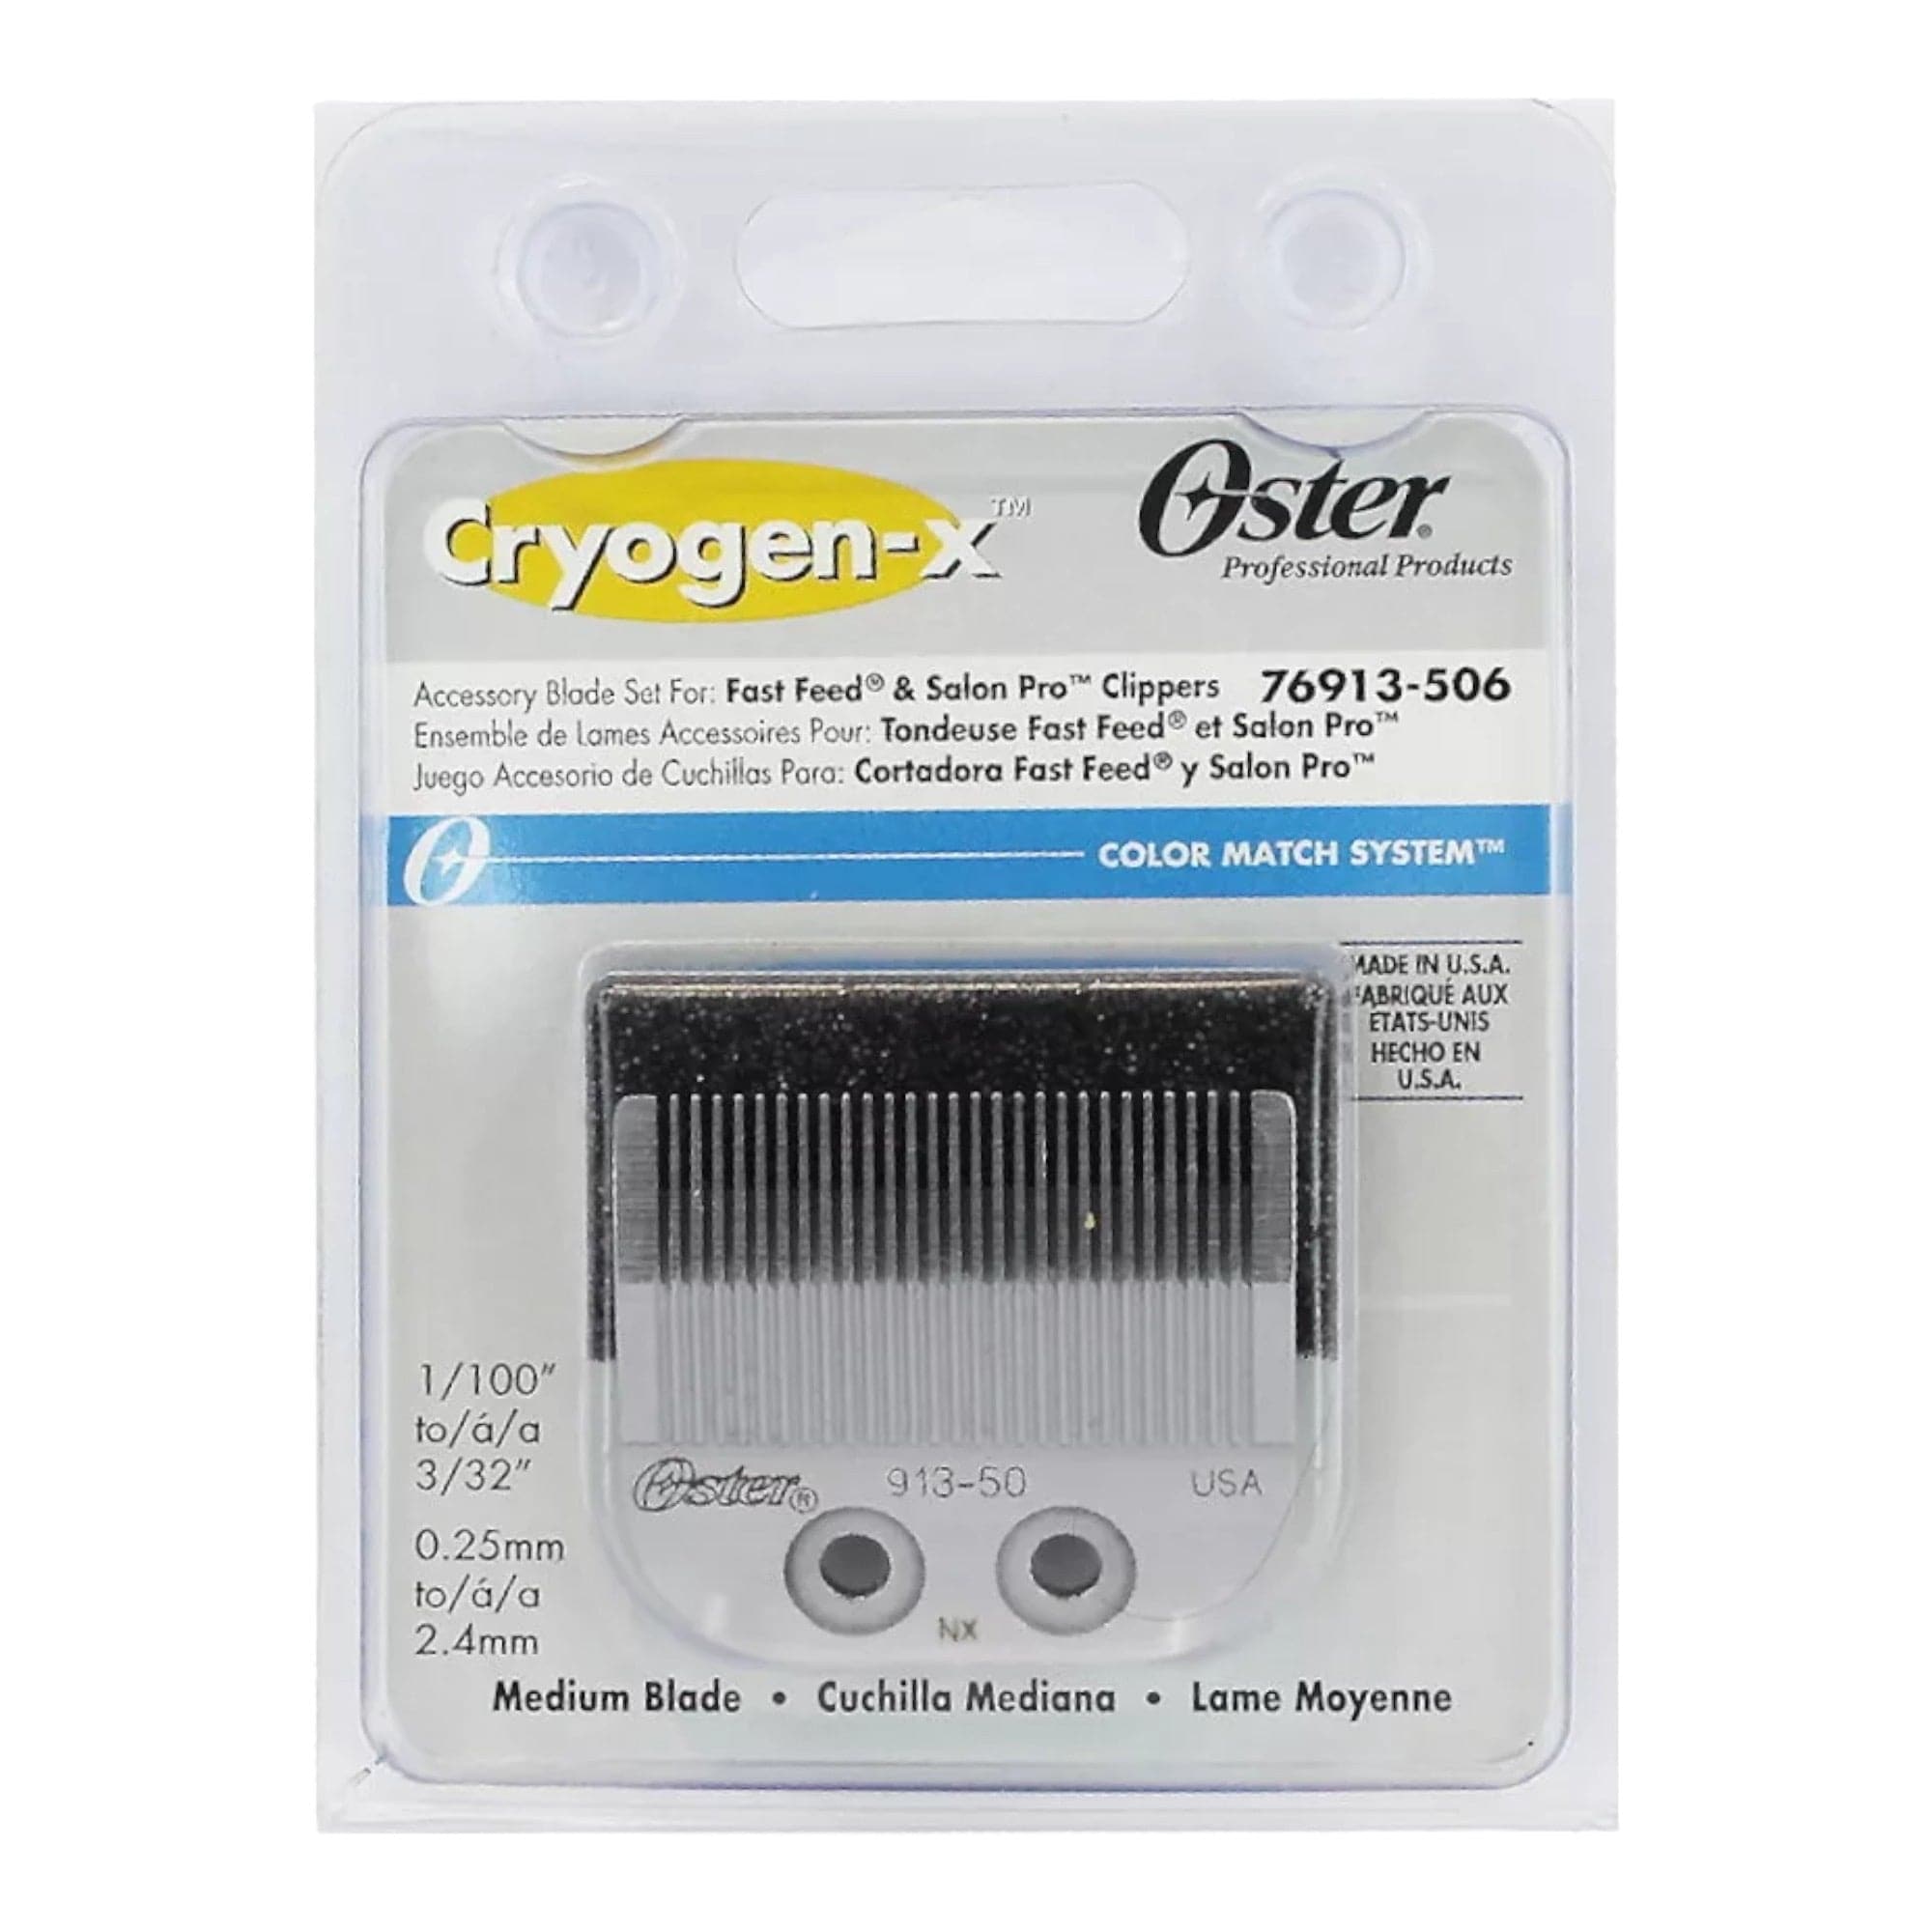 Oster - 76913-506 Cryogen-x Medium Blade 0.25mm - 2.4 mm